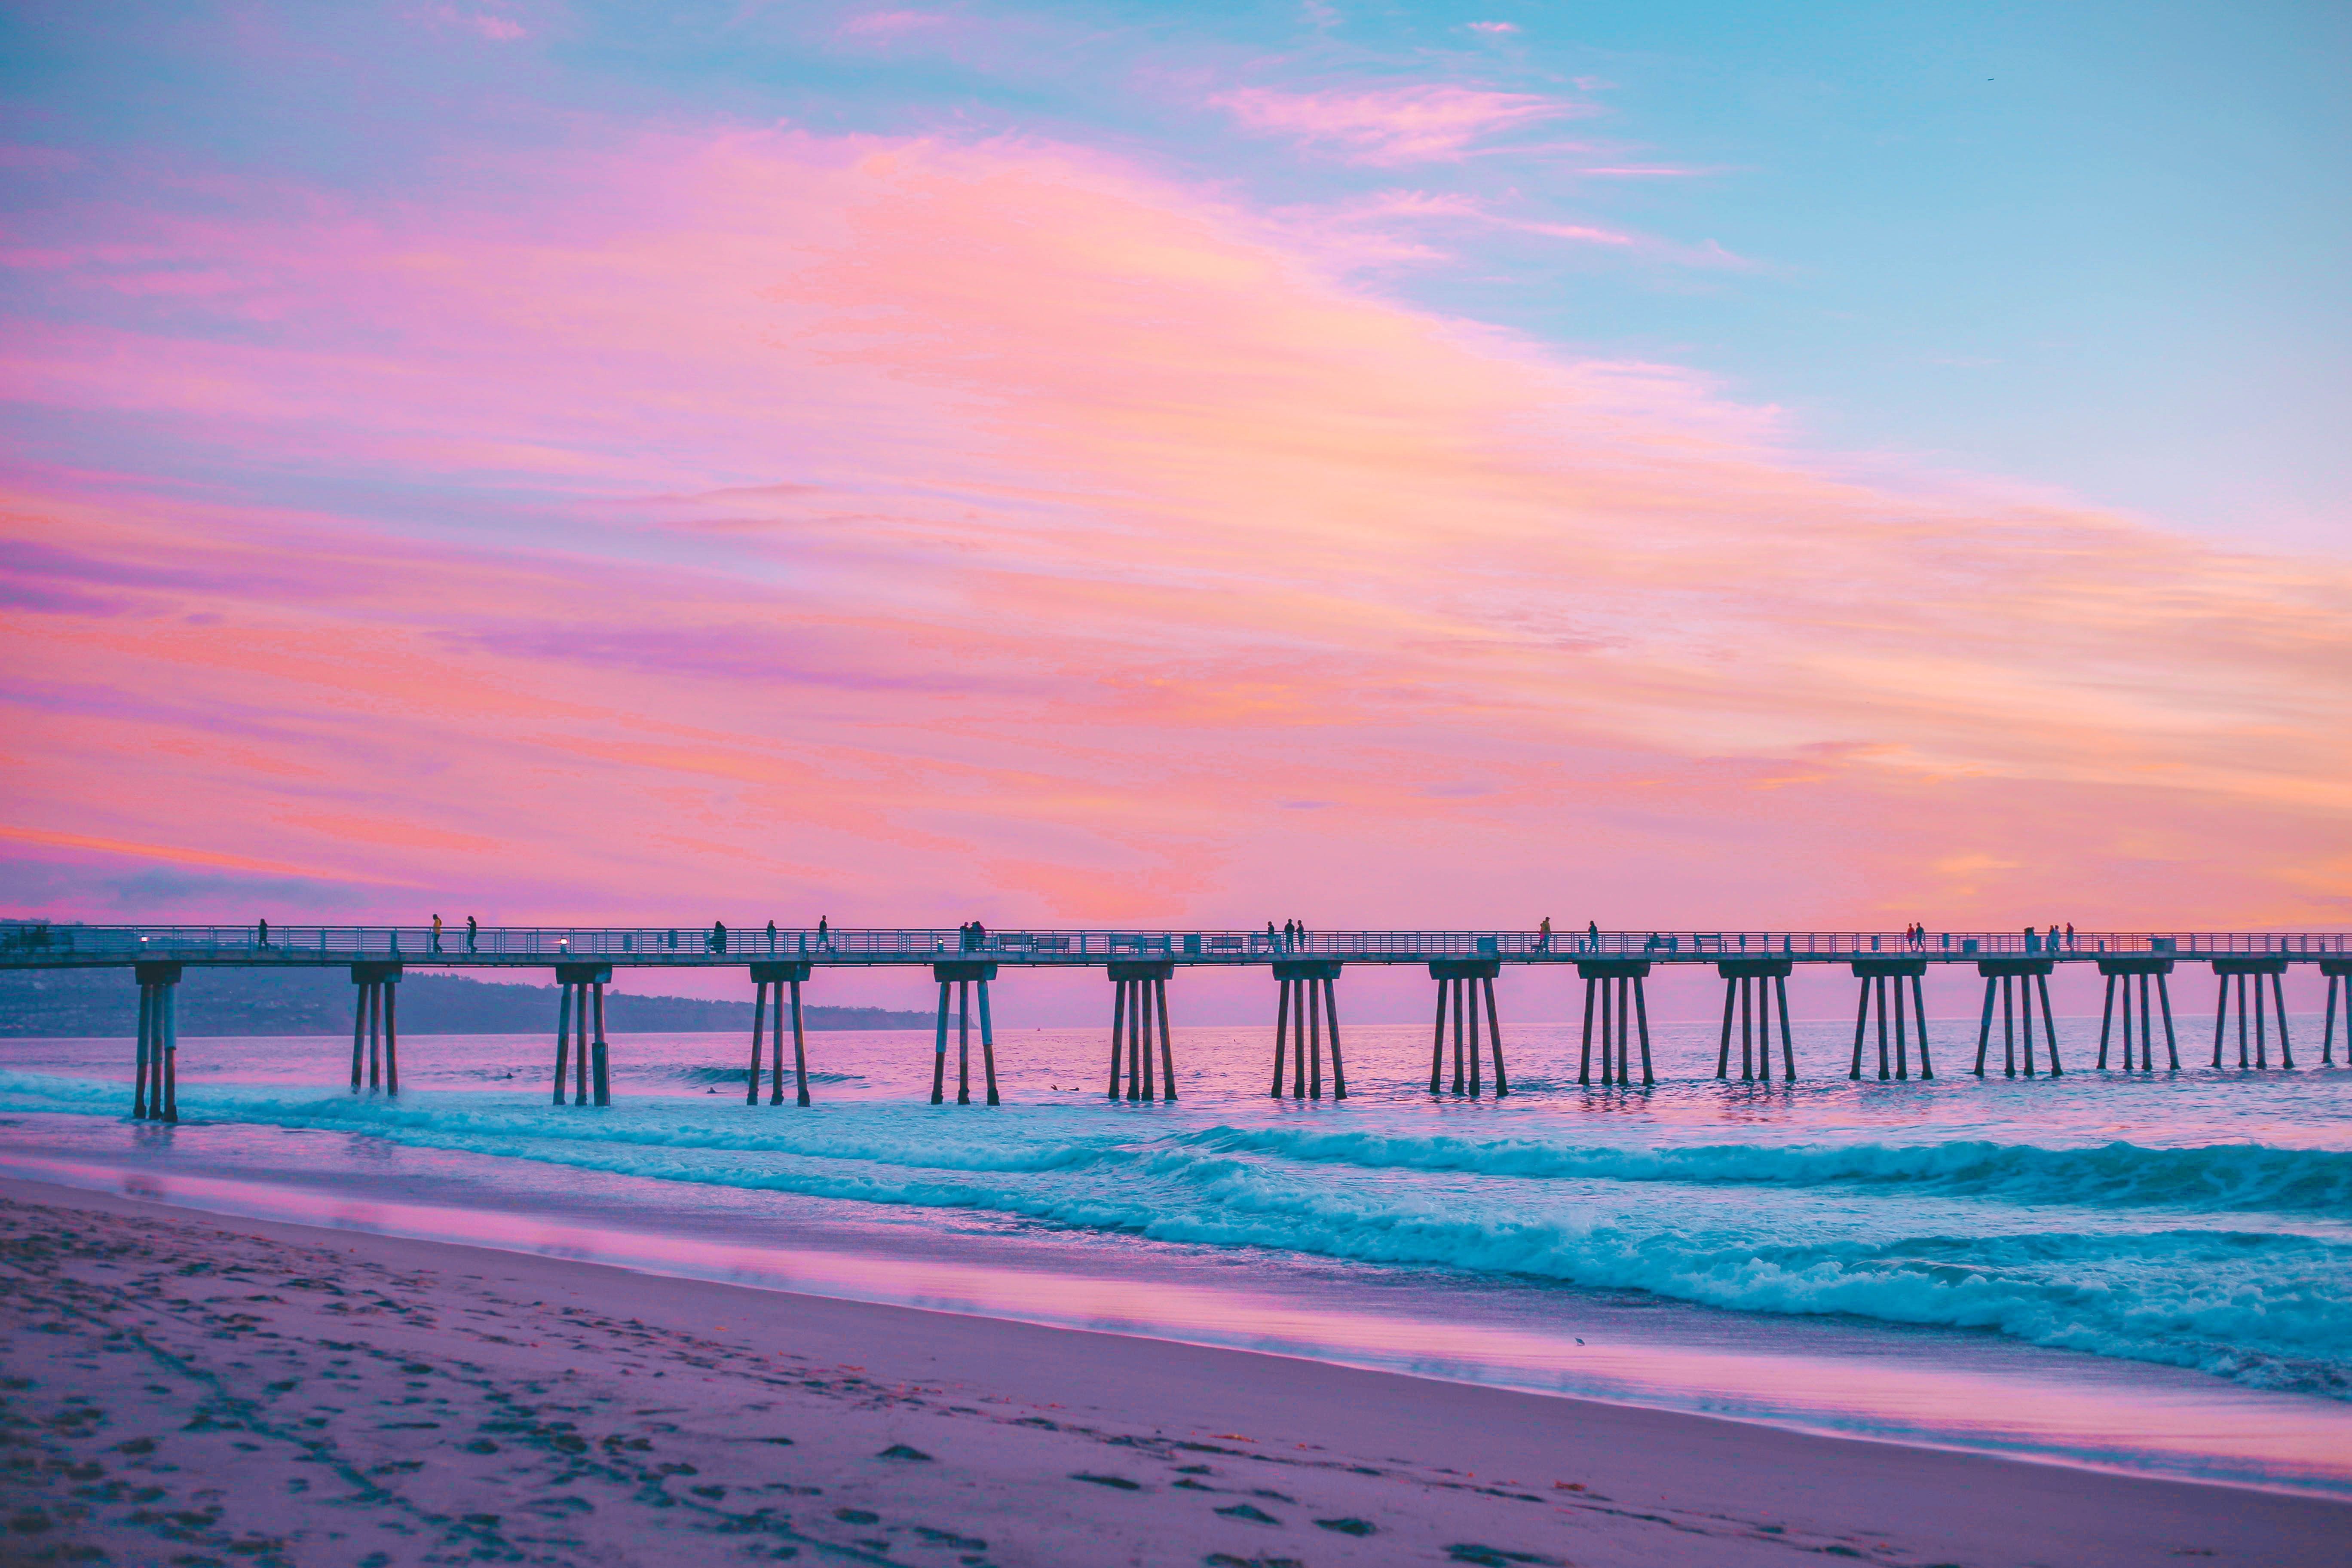 5472x3648 #sunrise, #wave, #sunset, #sea, #nature, #footprints, #blue, #water, #pastel, #pink, #californium, #pier, #sand, #ocean, #bridge, #Public domain image, #beach, #orange. Mocah.org HD Wallpaper